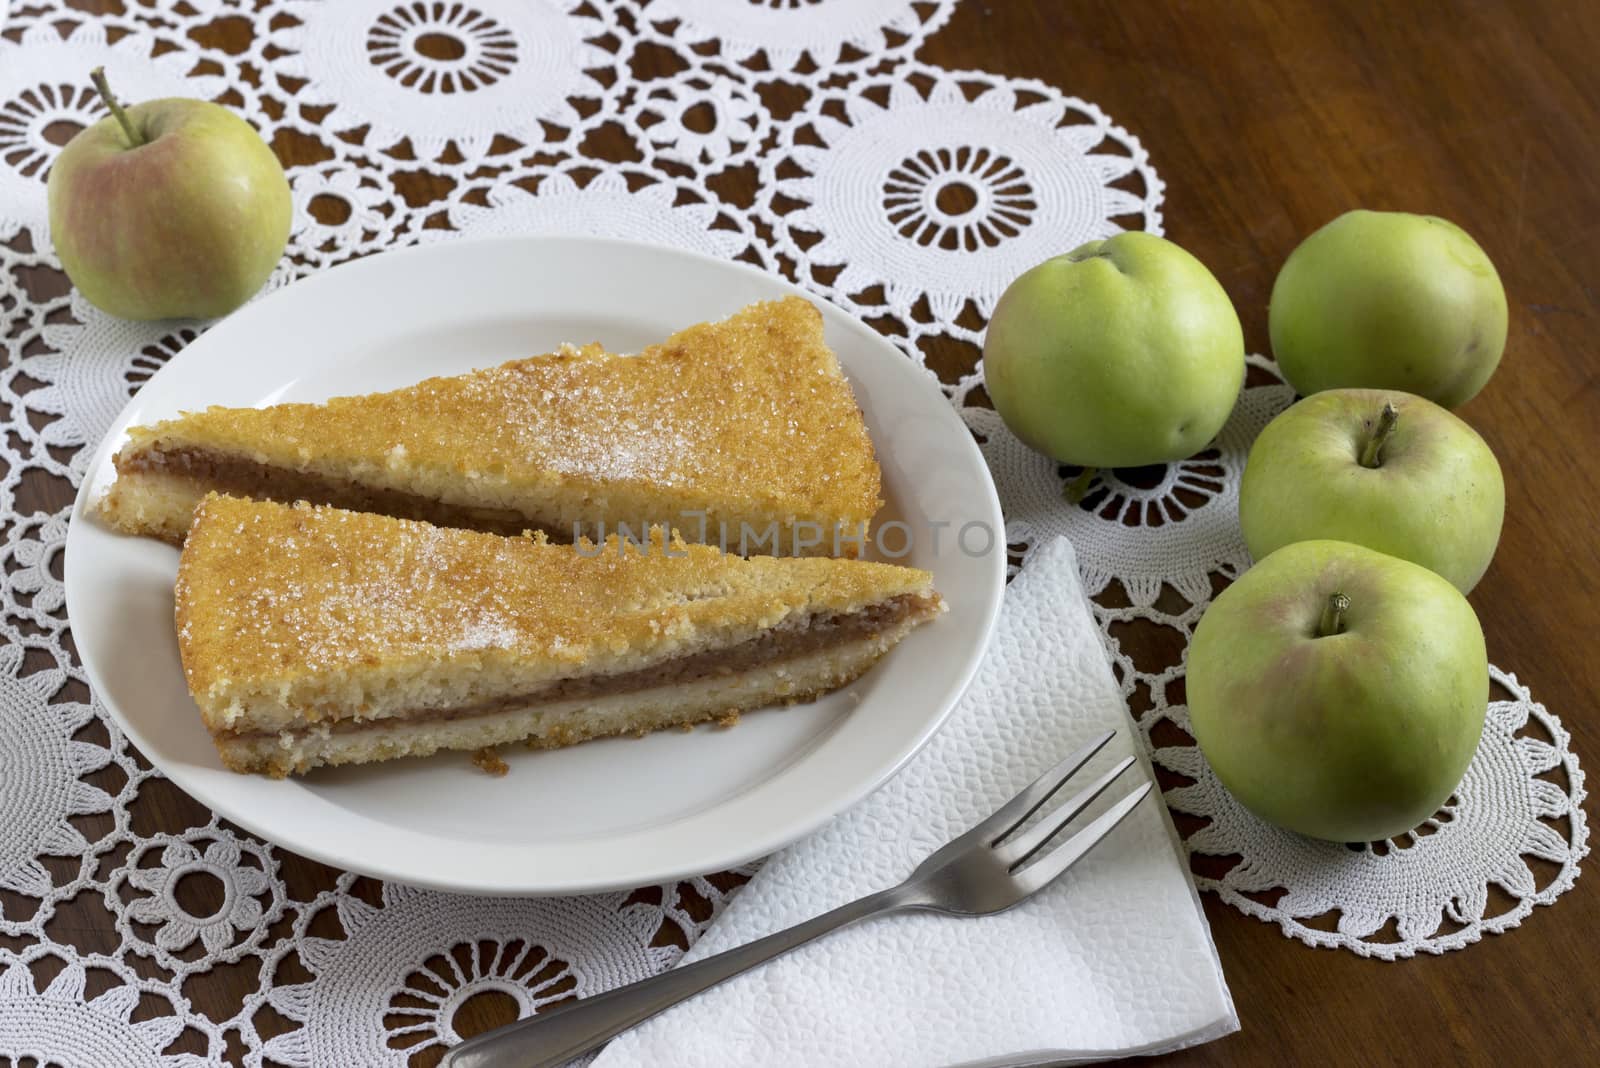 Freshly baked apple pie on wooden table